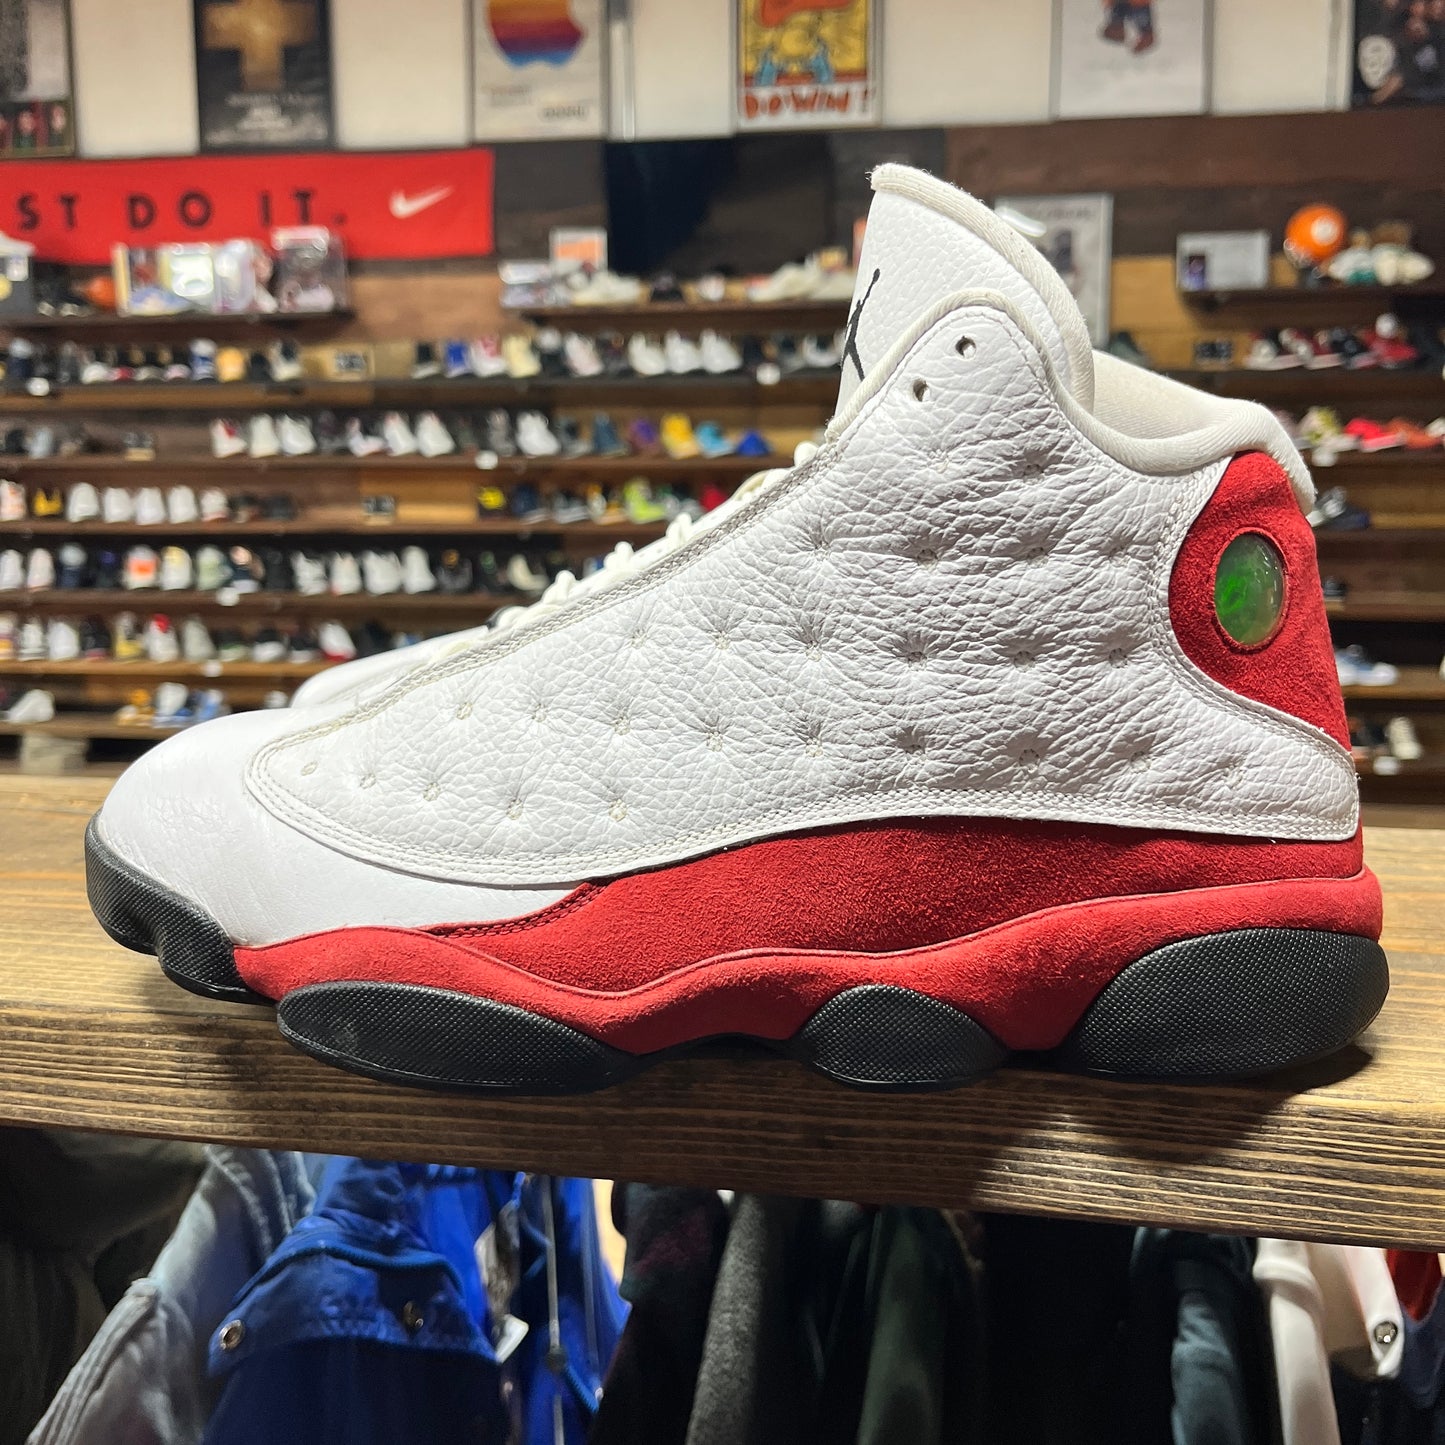 Jordan 13 'Chicago' Size 12.5